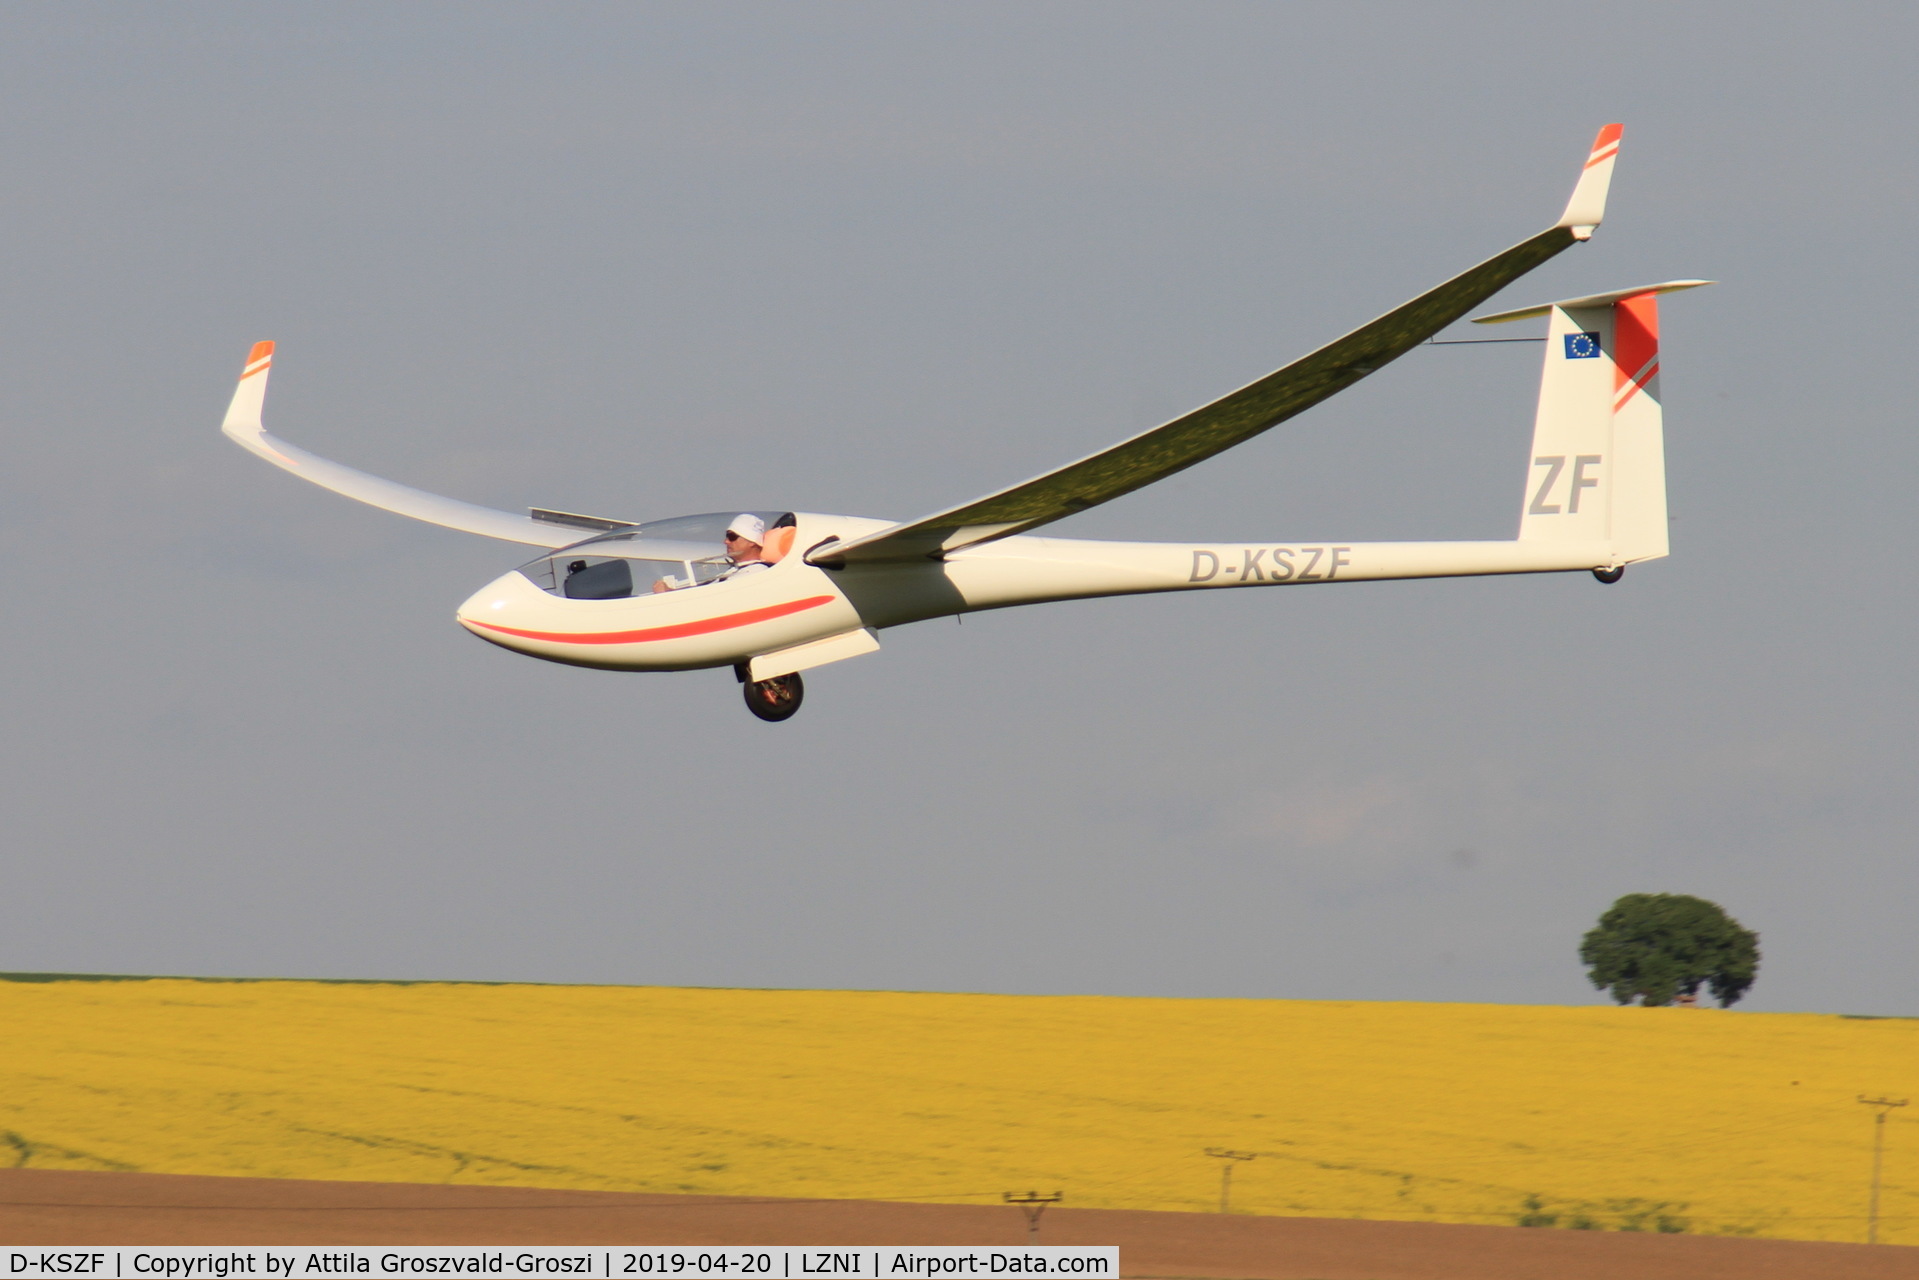 D-KSZF, 2003 Lange E-1 Antares 20E C/N Not found D-KSZF, LZNI - Nitra Airport, Slovakia - Pribina Cup 2019